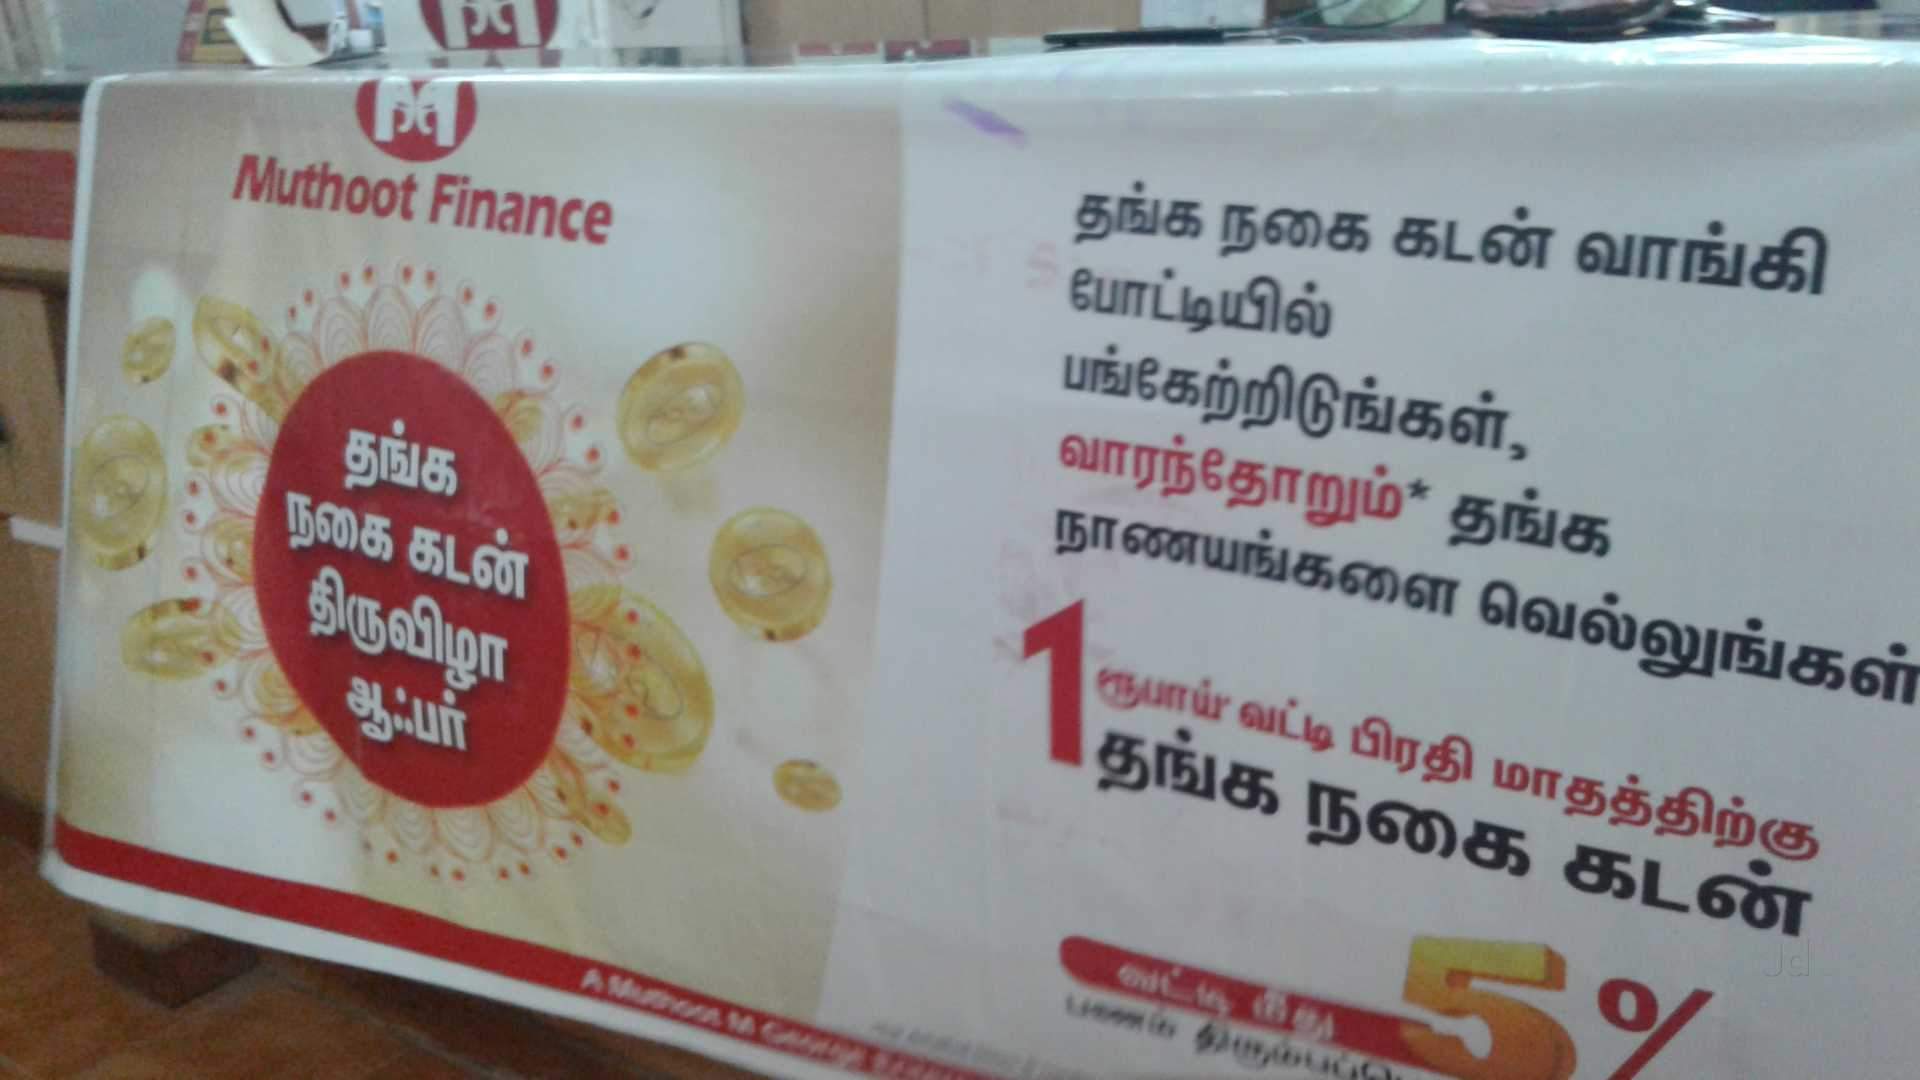 Muthoot Finance Ltd Chellampatti Loan Against Gold In Madurai